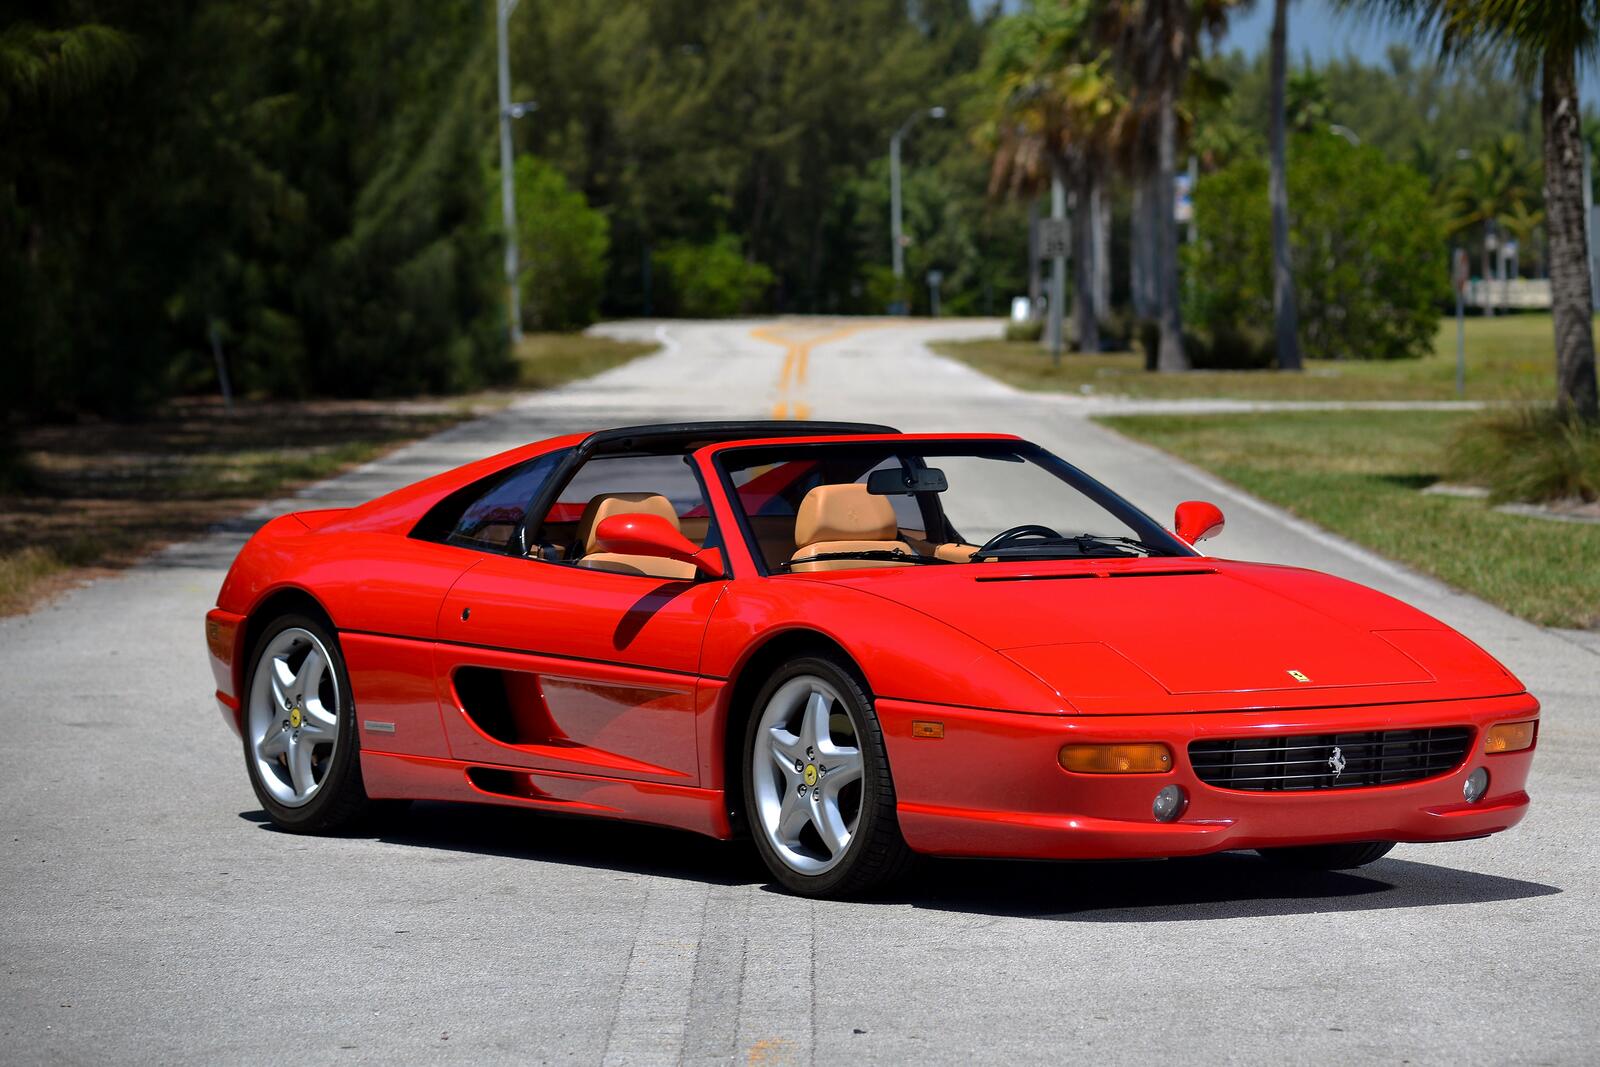 Free photo Ferrari gts f355 convertible in red.